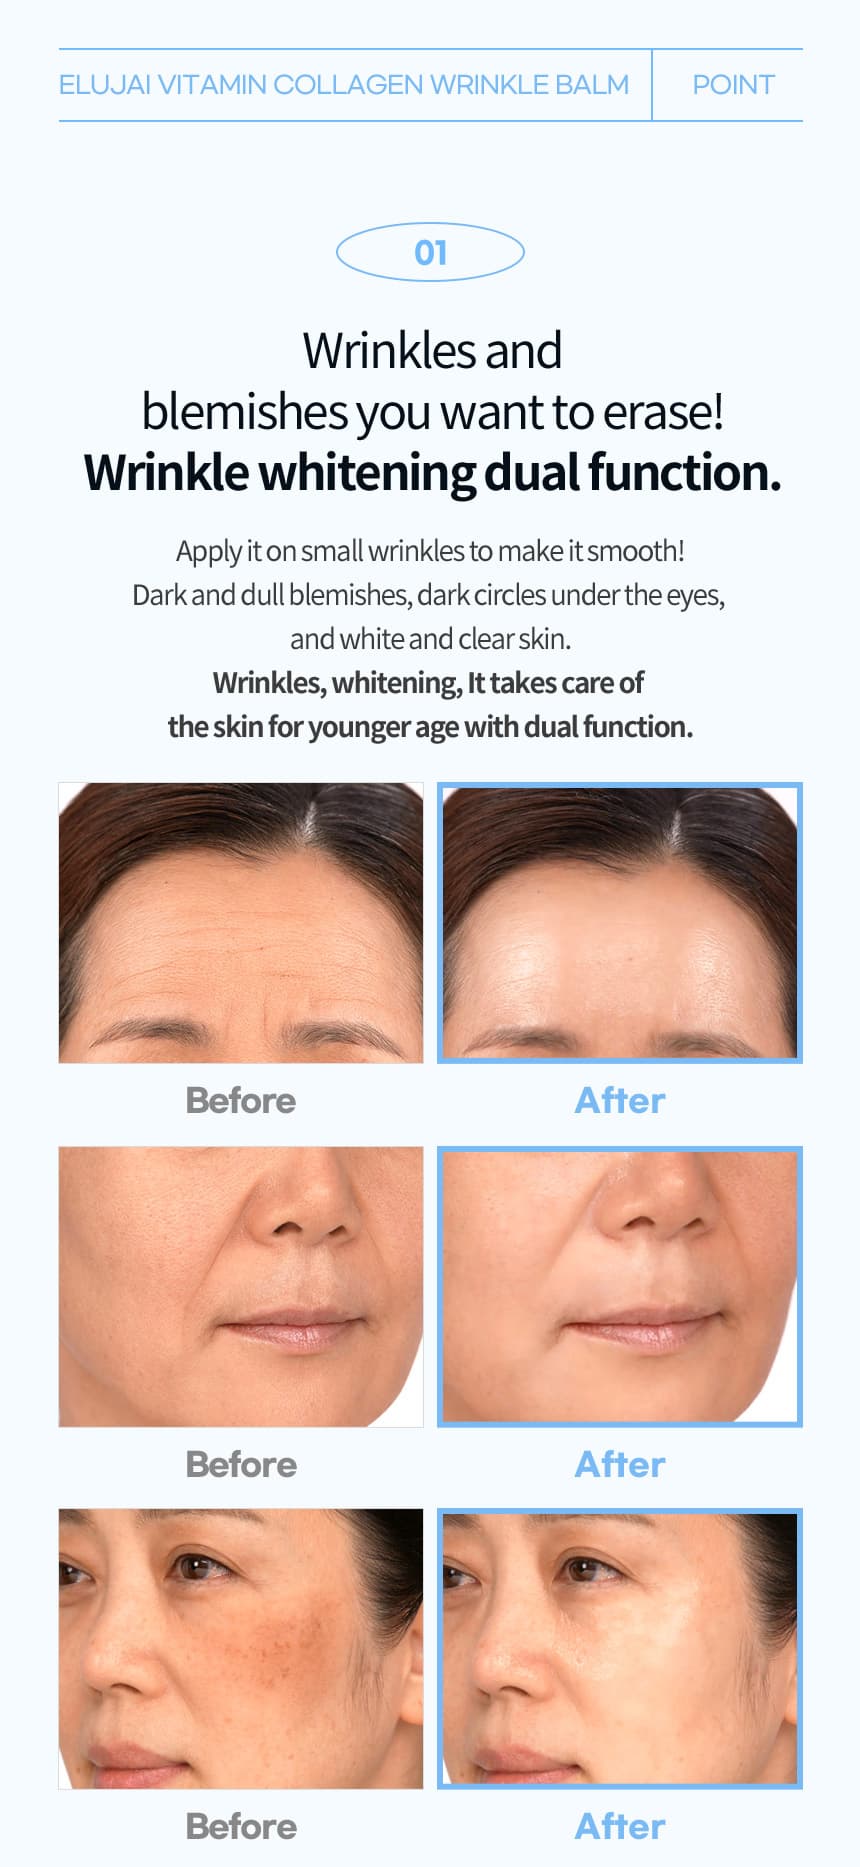 18 Pieces ELUJAI Collagen Wrinkle Balms 10g Dry Skincare Moisture Anti Wrinkles Hyaluronic Acid Elasticity